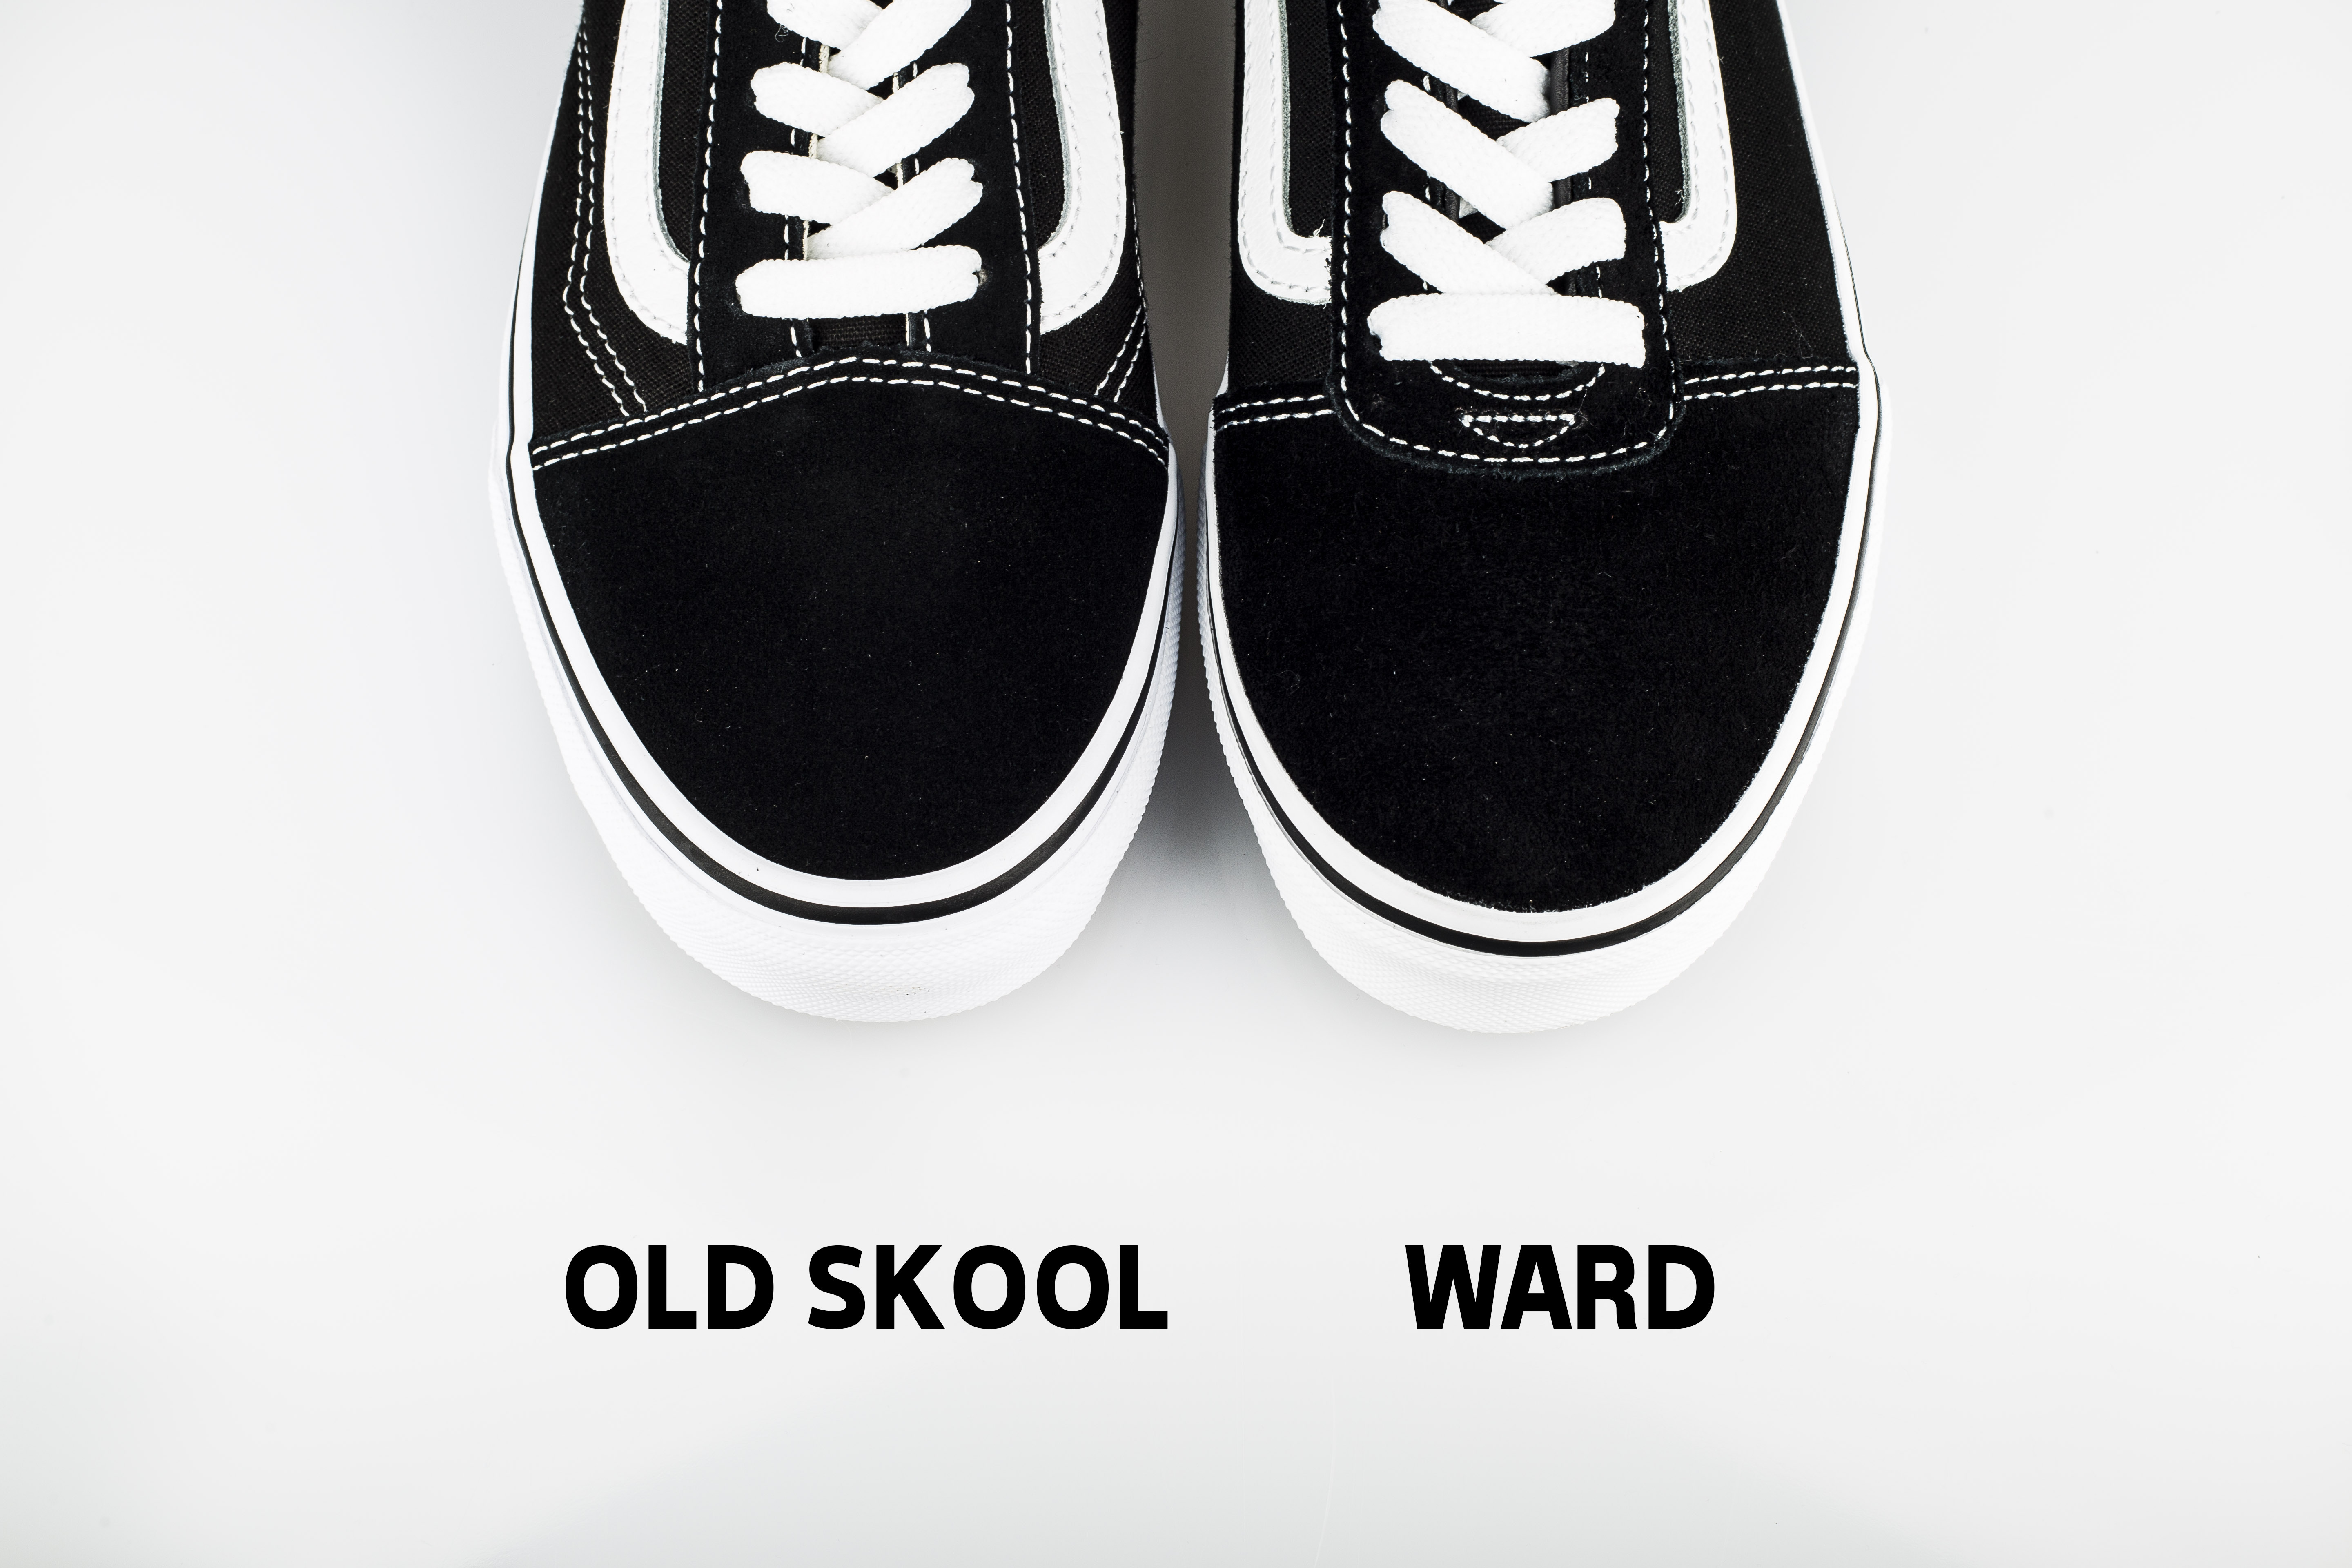 vans ward vs old skool difference